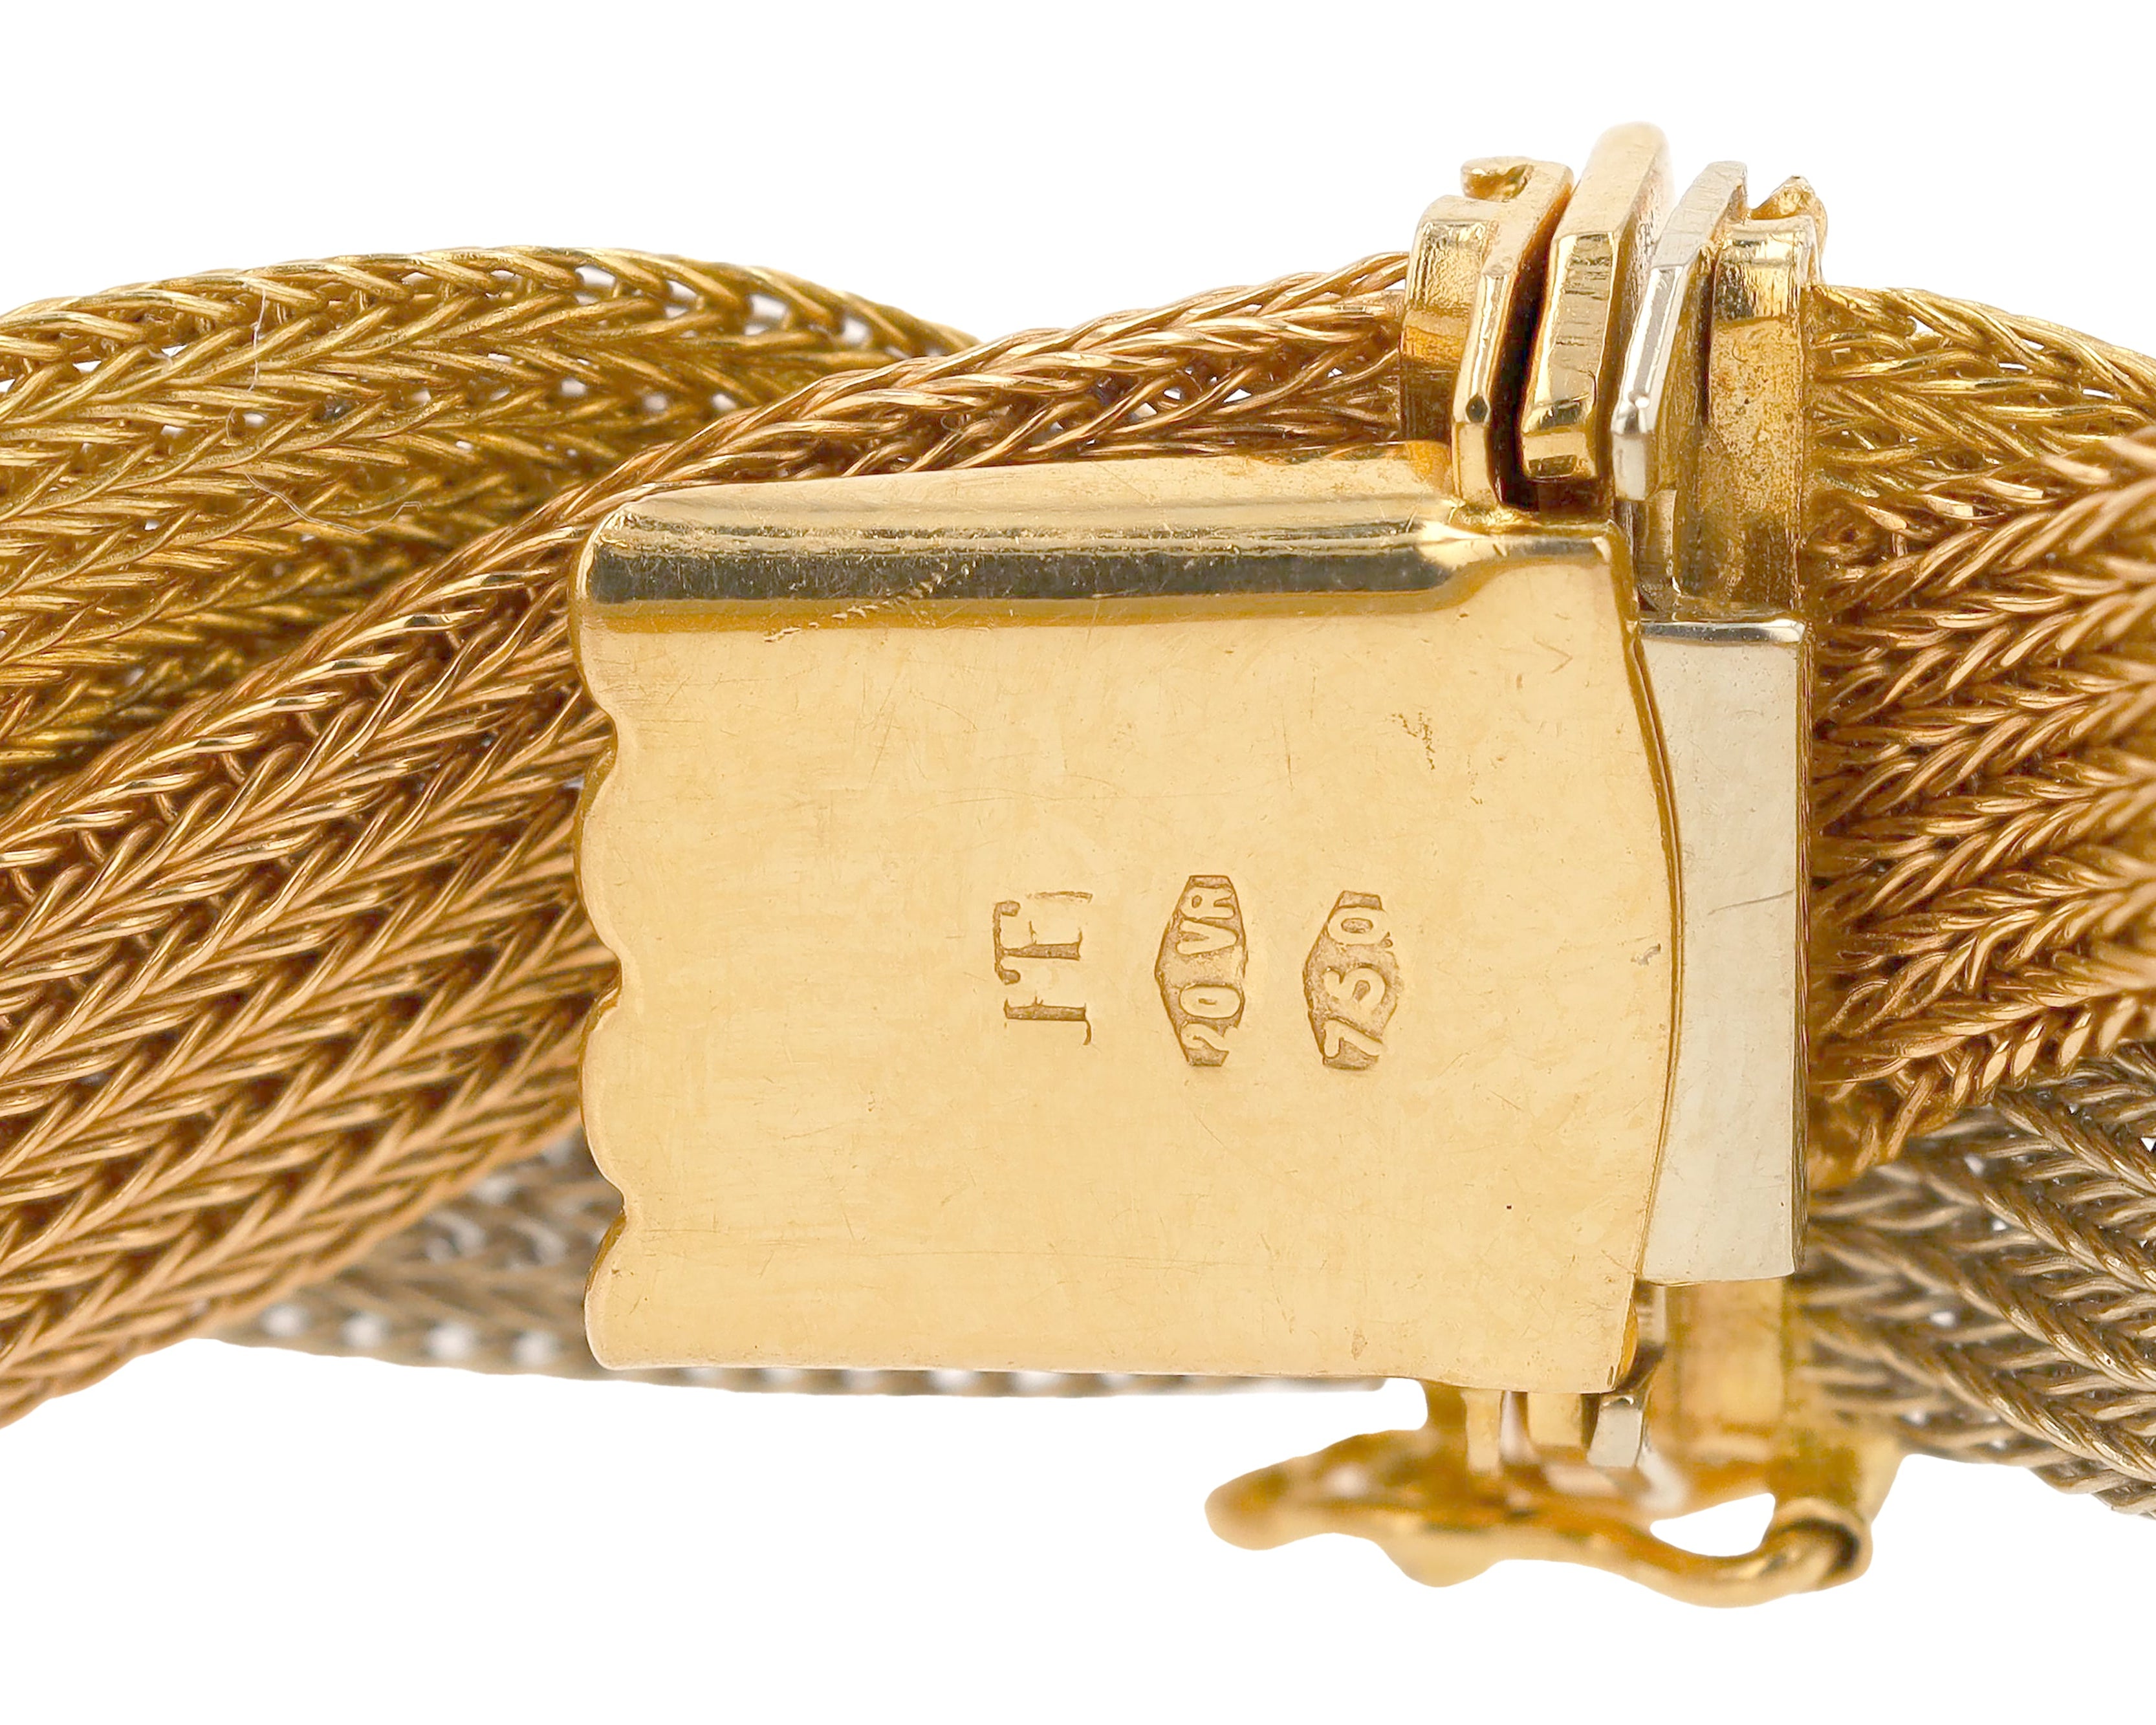 Italian 18K Tri-Color Gold Braided Mesh Bracelet